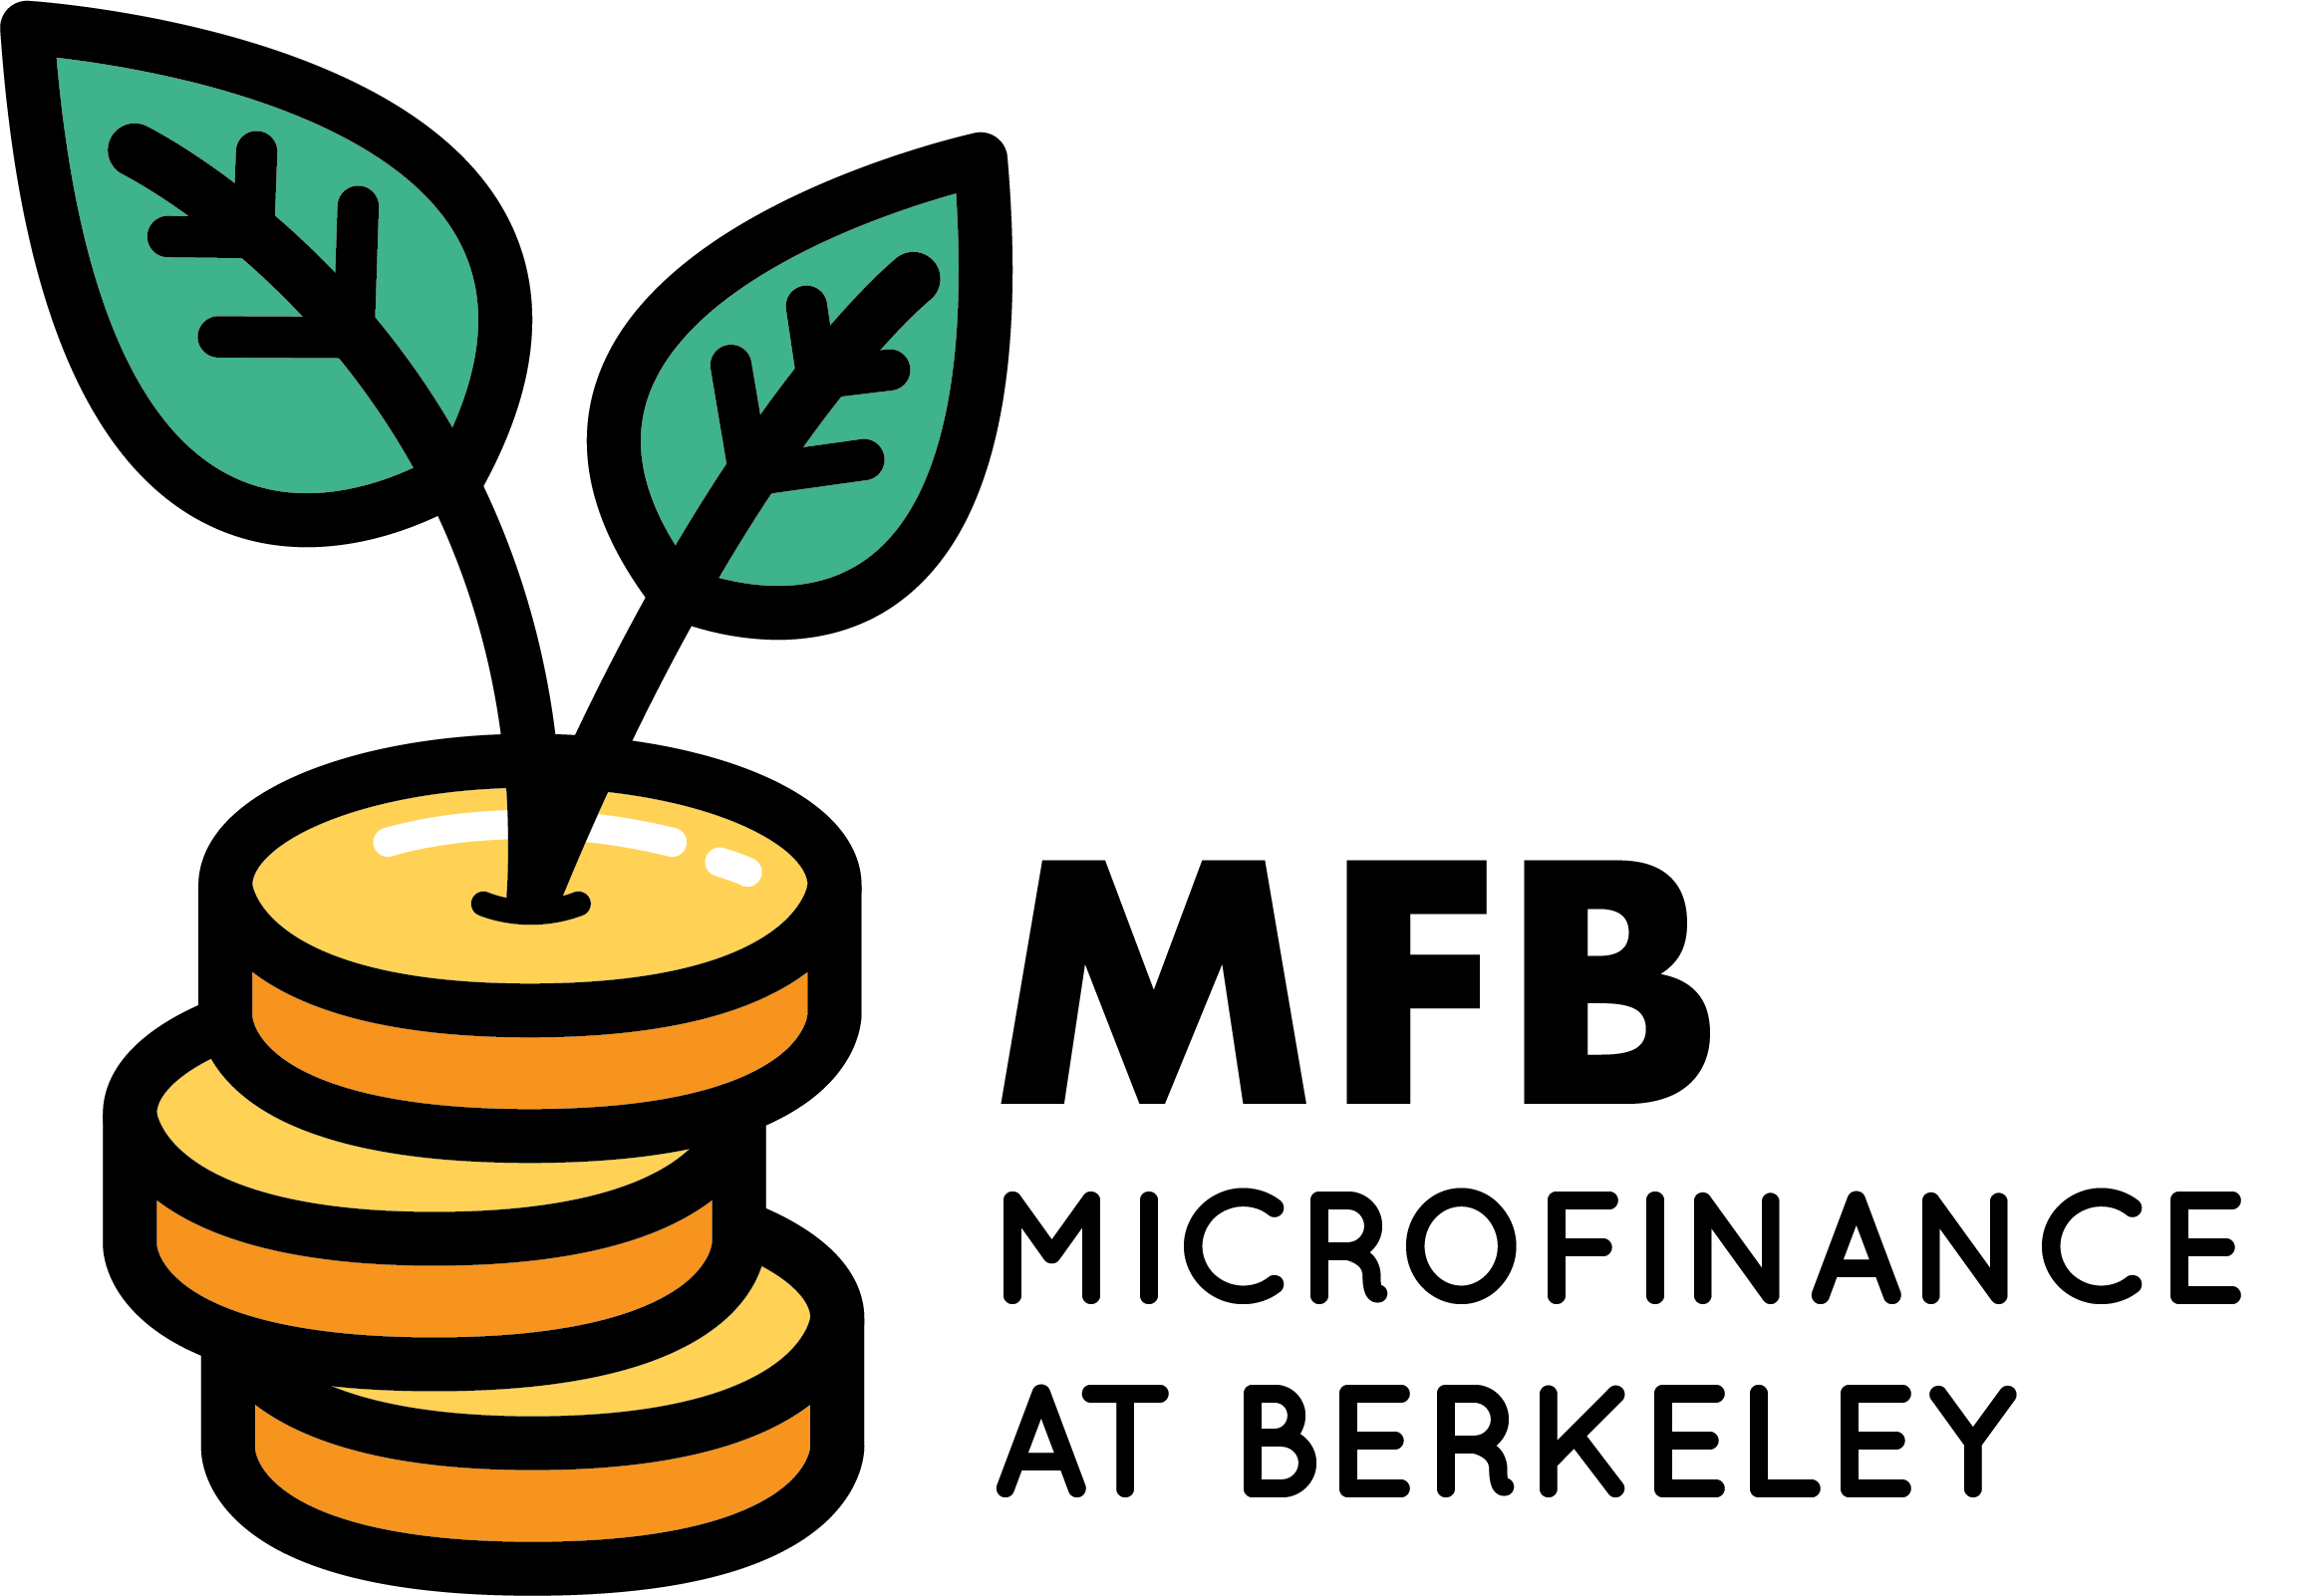 Microfinance at Berkeley